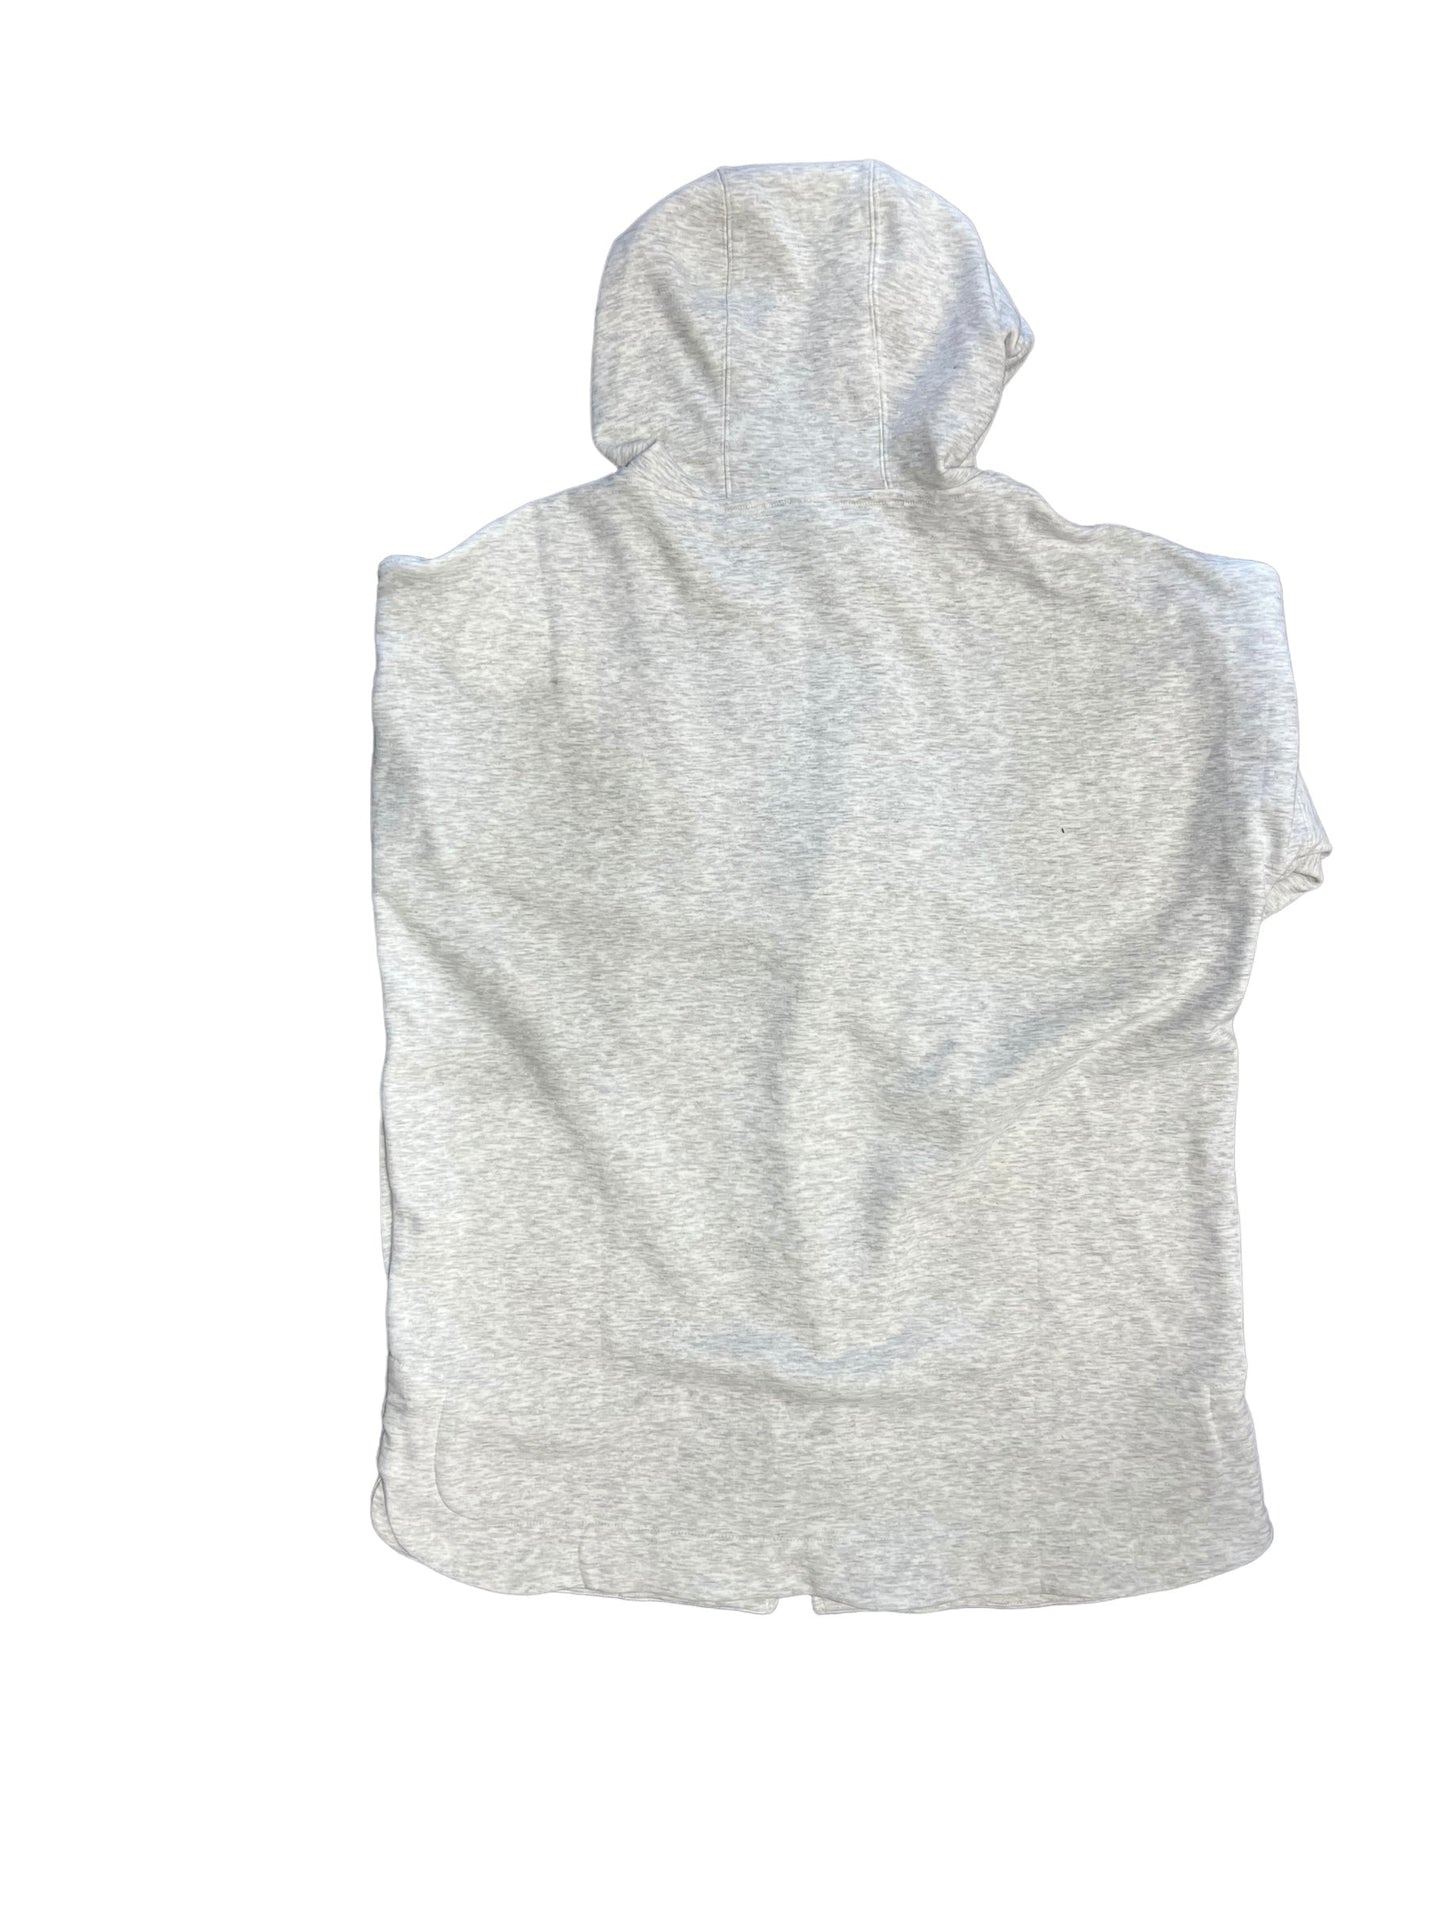 Athletic Sweatshirt Hoodie By Mono B  Size: 1x